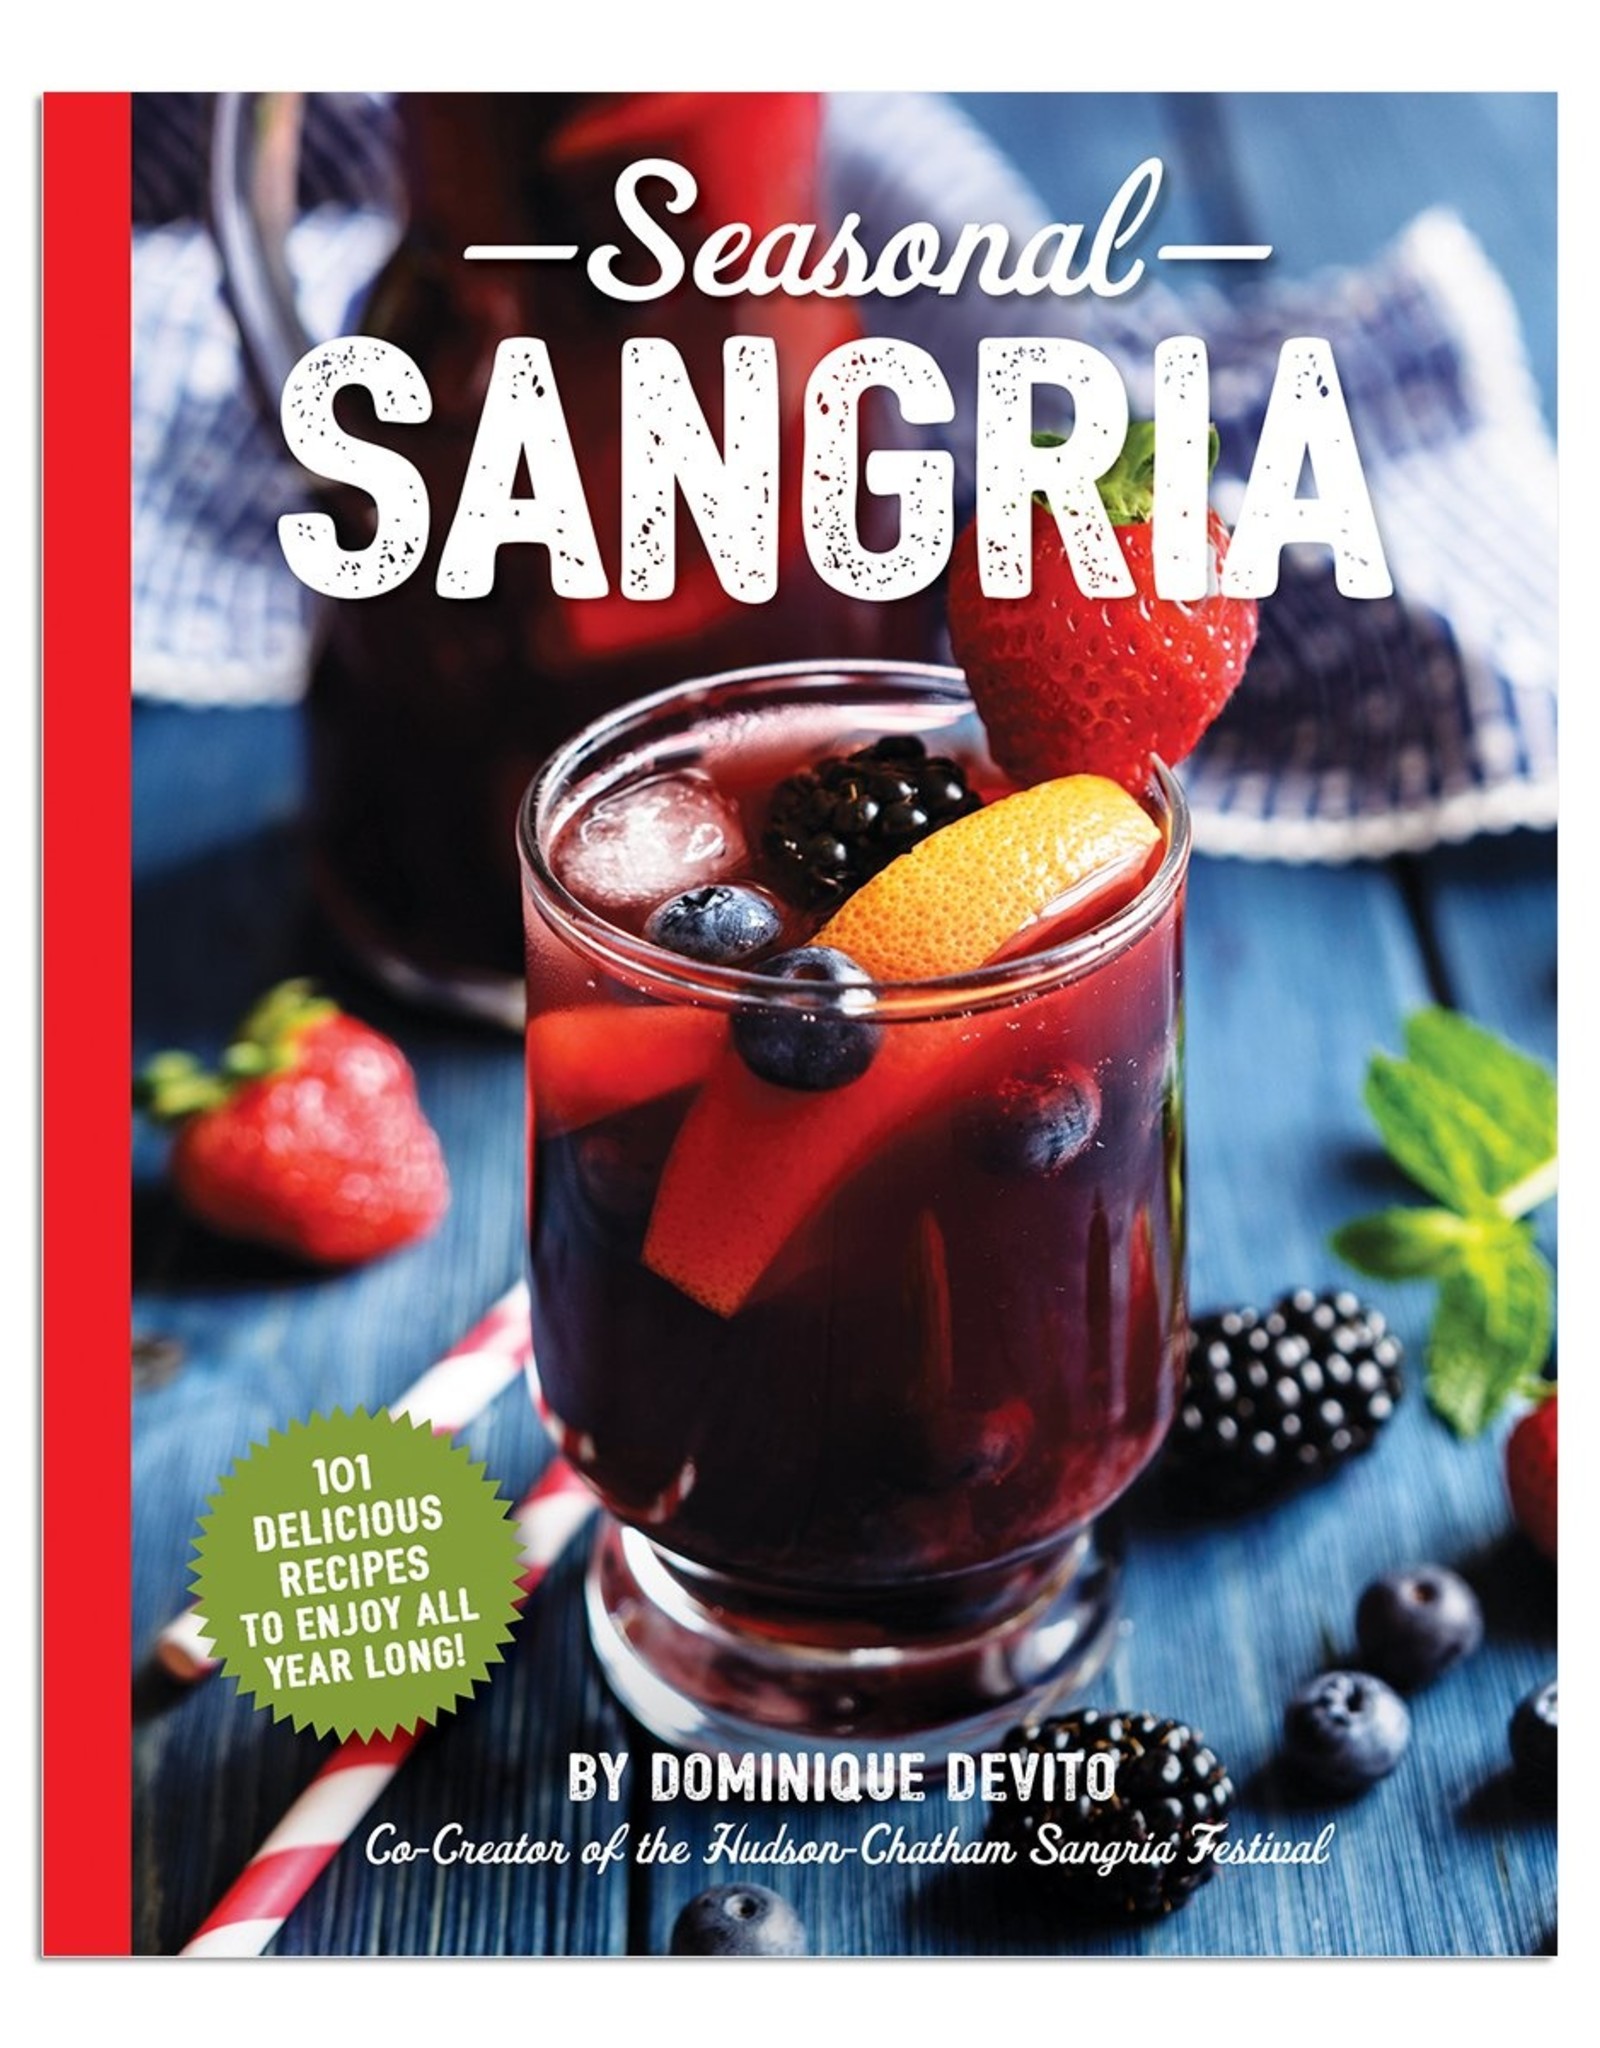 Simon & Schuster Seasonal Sangria